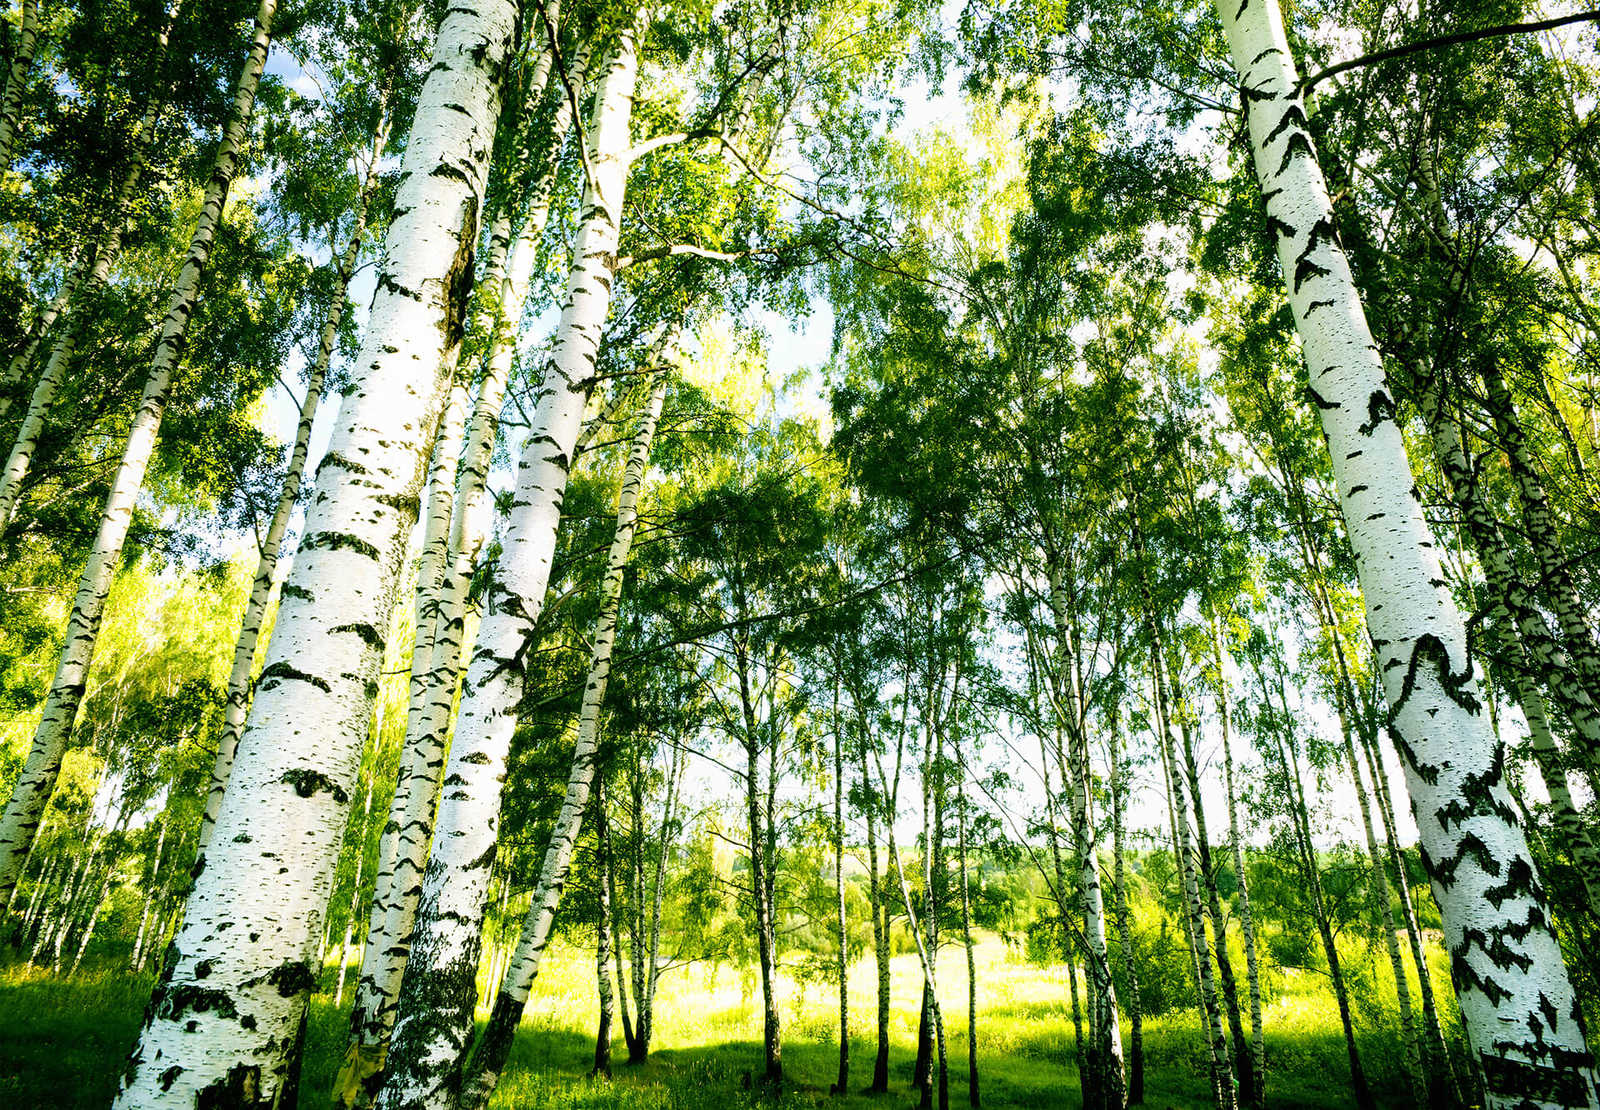         Birch forest mural trees sunshine
    